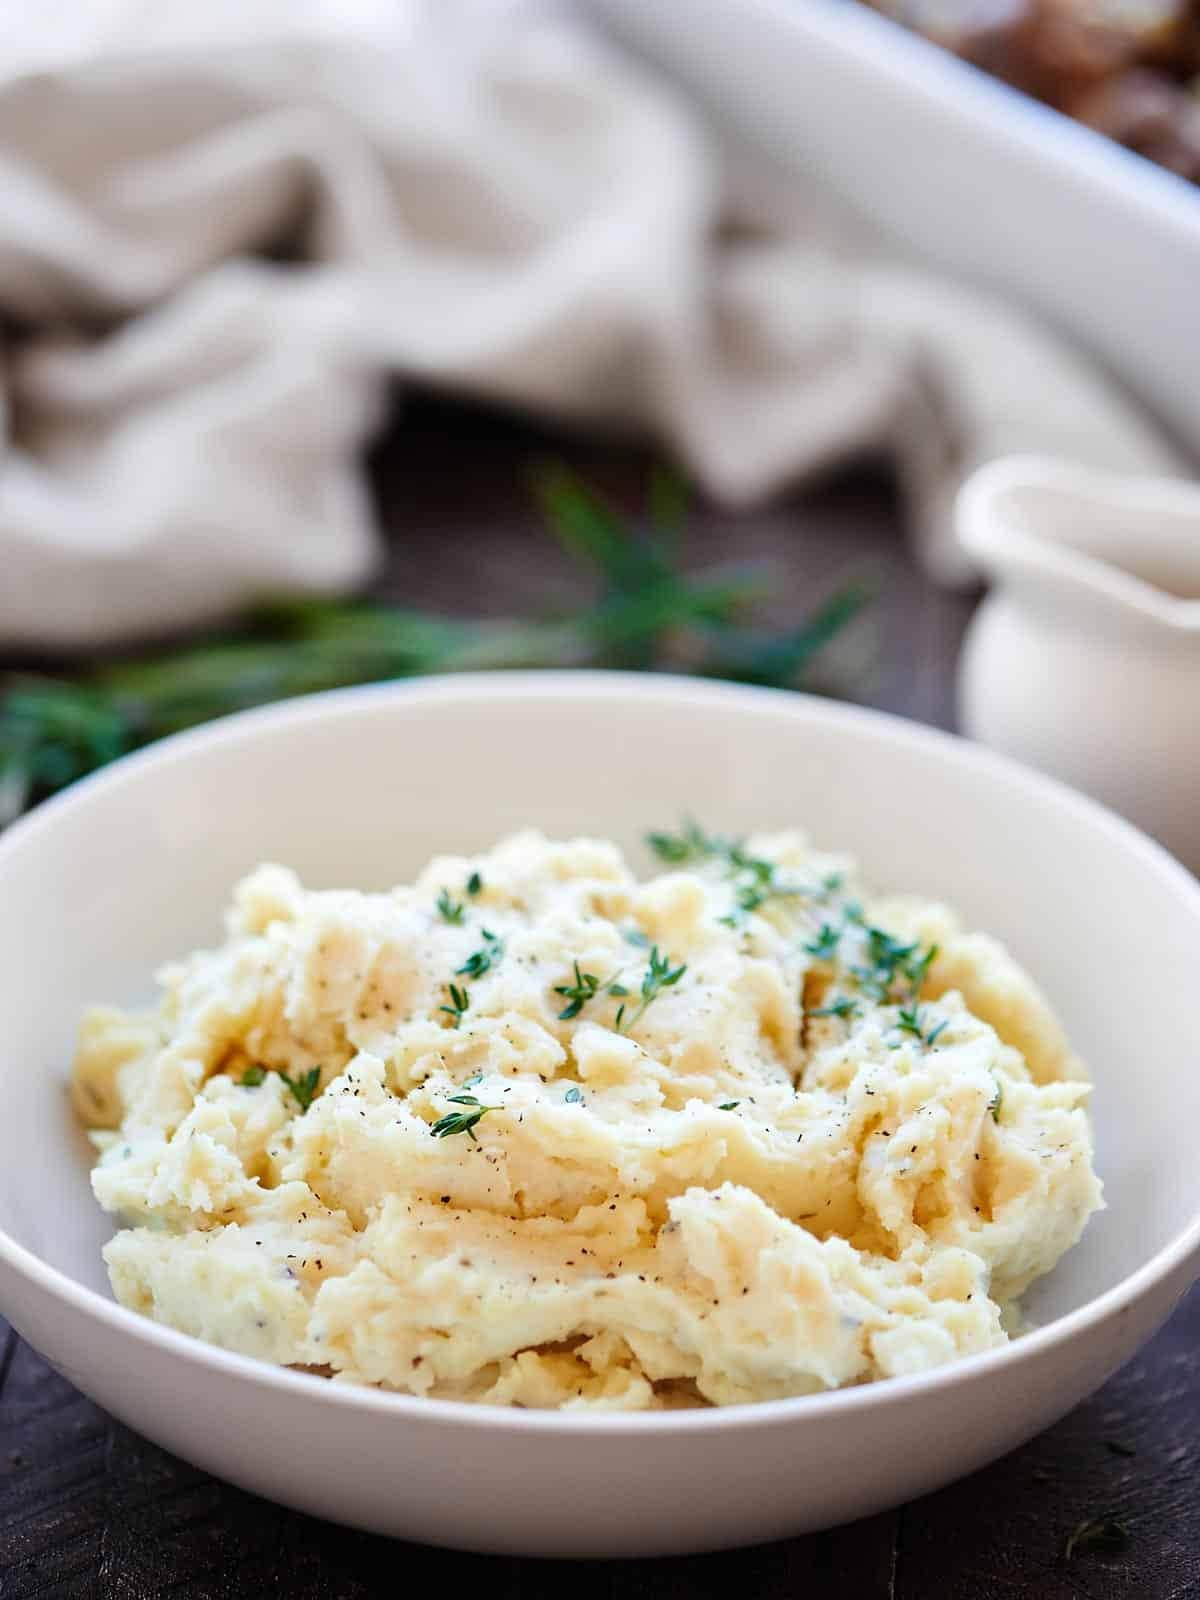 A serving of creamy mashed potato on a white bowl.